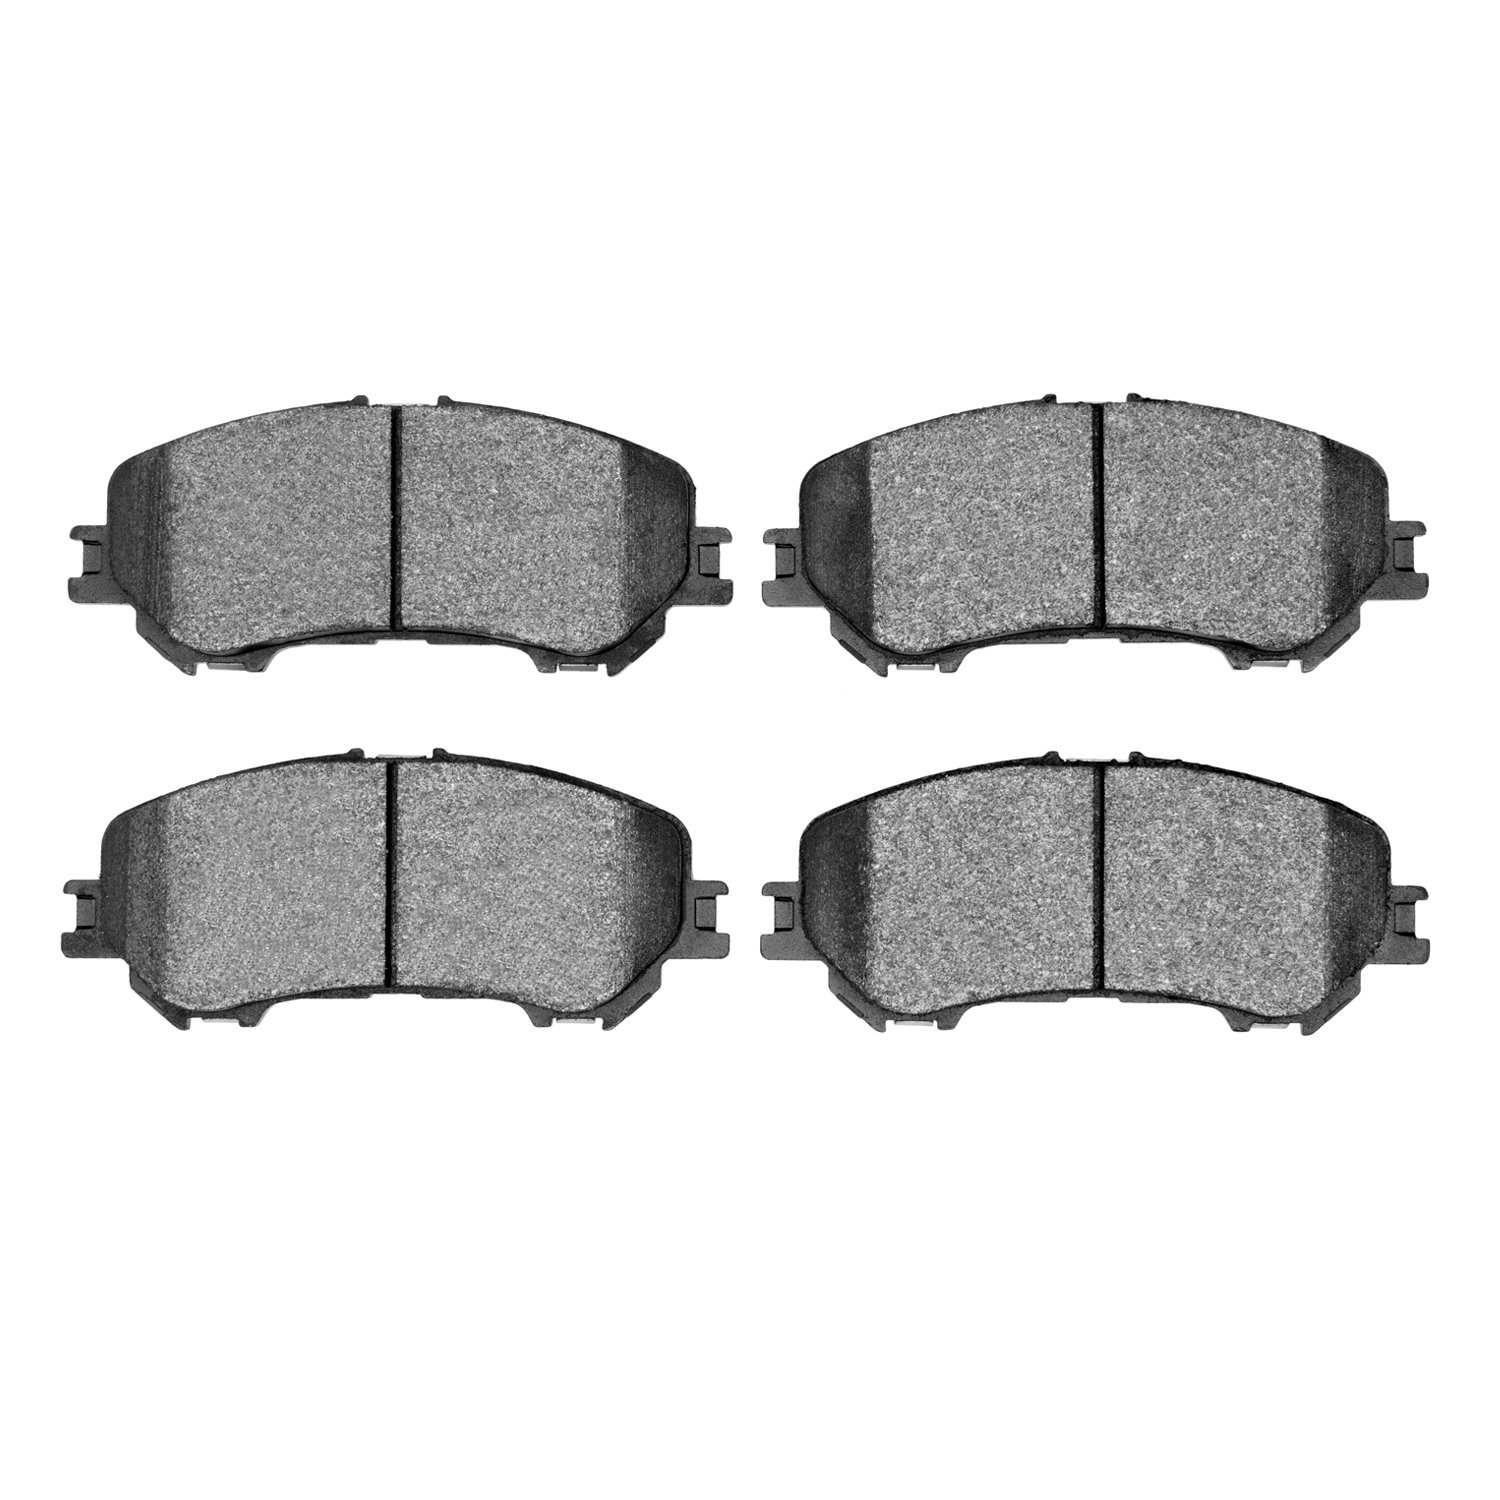 1551-1737-00 5000 Advanced Ceramic Brake Pads, Fits Select Multiple Makes/Models, Position: Front